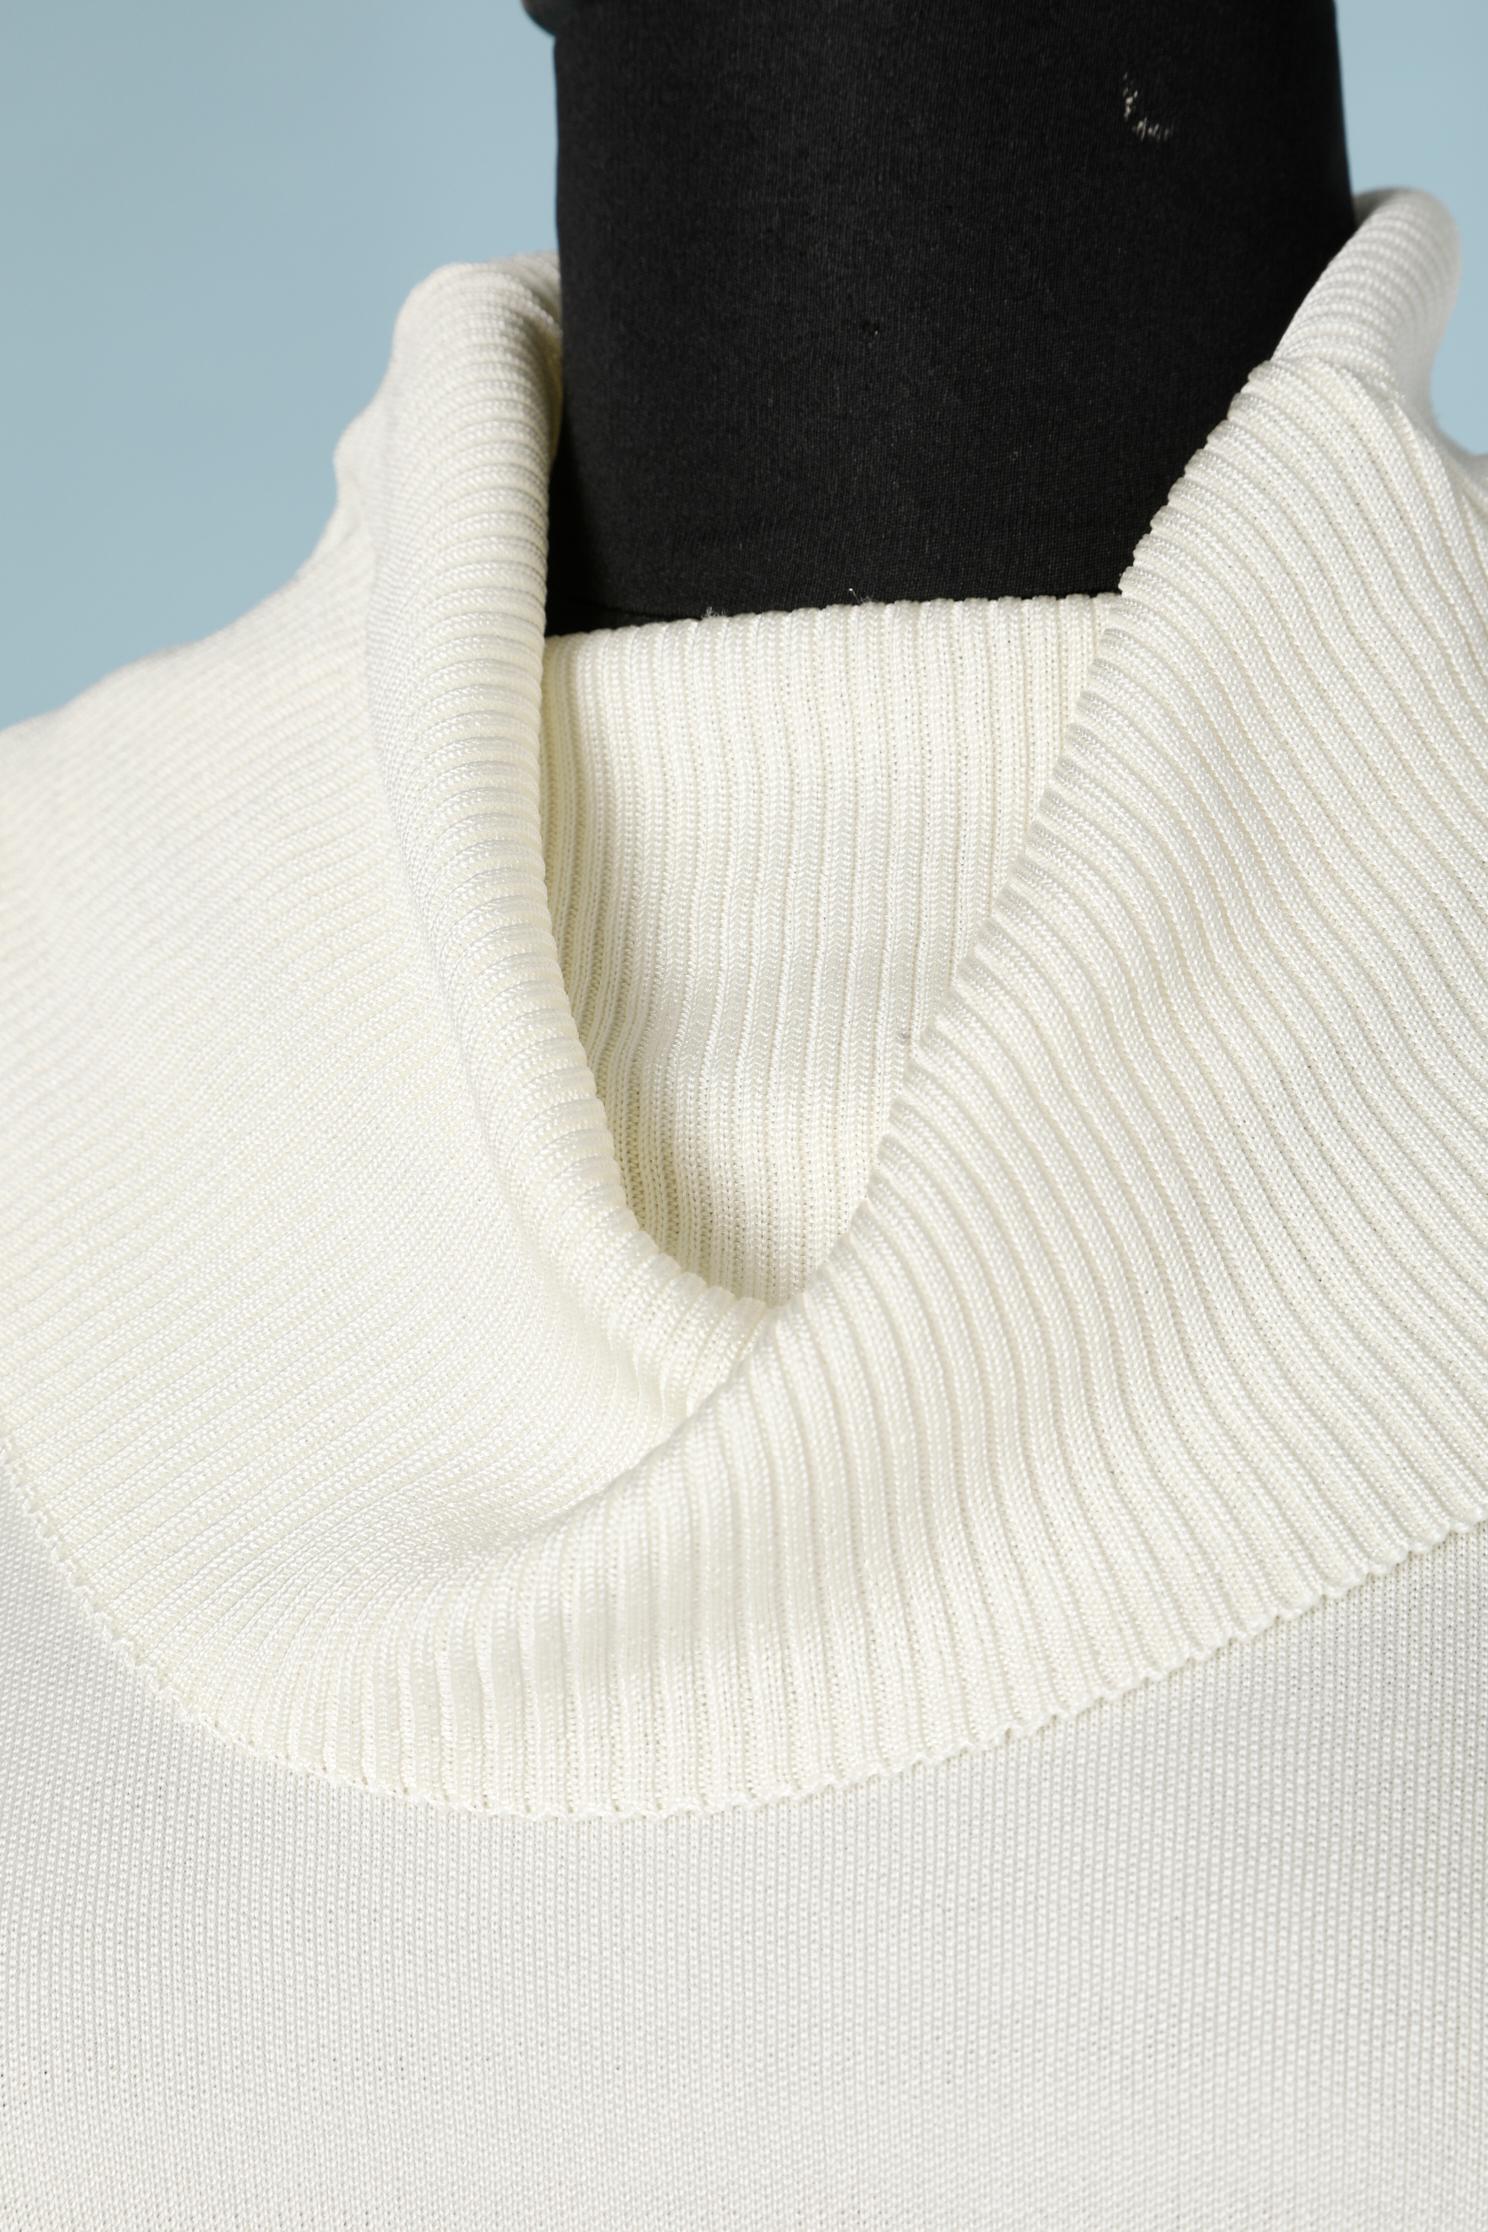 White turtle neck sweater Pierre Cardin  In Excellent Condition For Sale In Saint-Ouen-Sur-Seine, FR